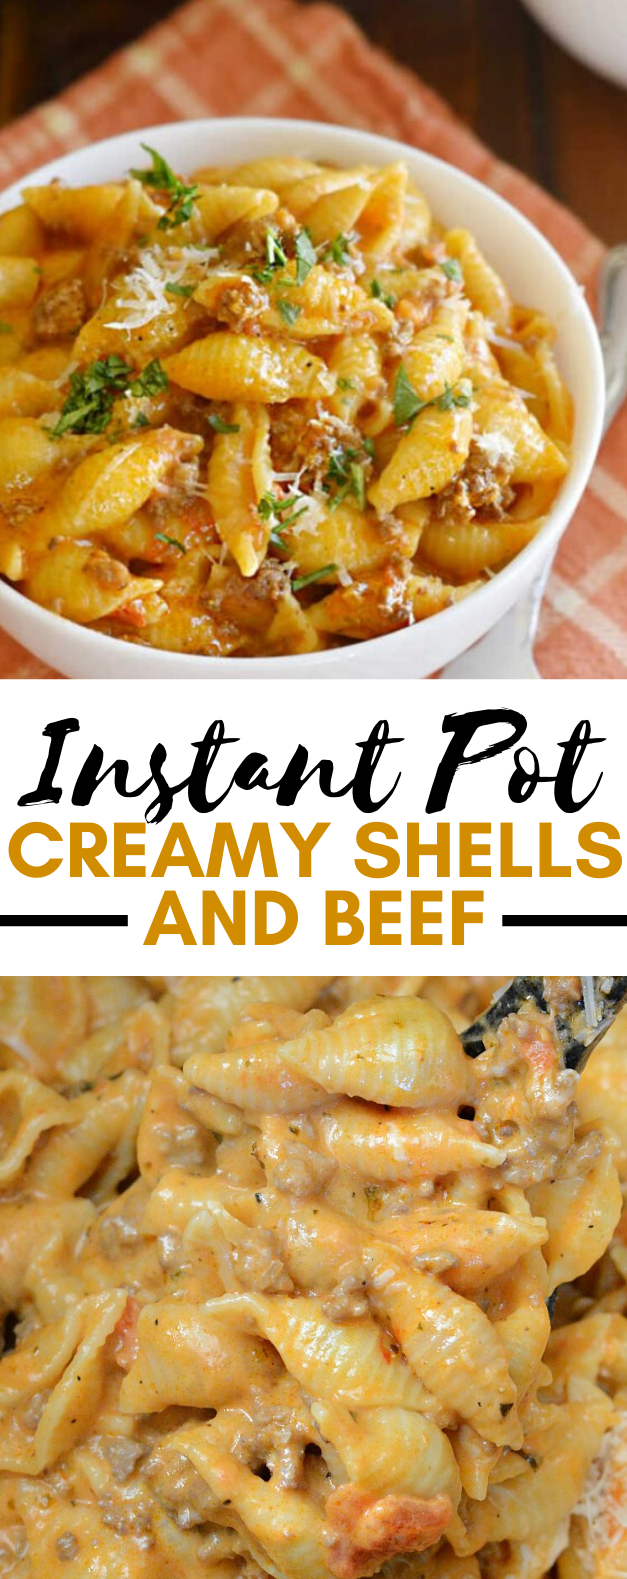 Instant Pot Creamy Shells and Beef #dinner #comfortfood #pasta #instantpot #lunch